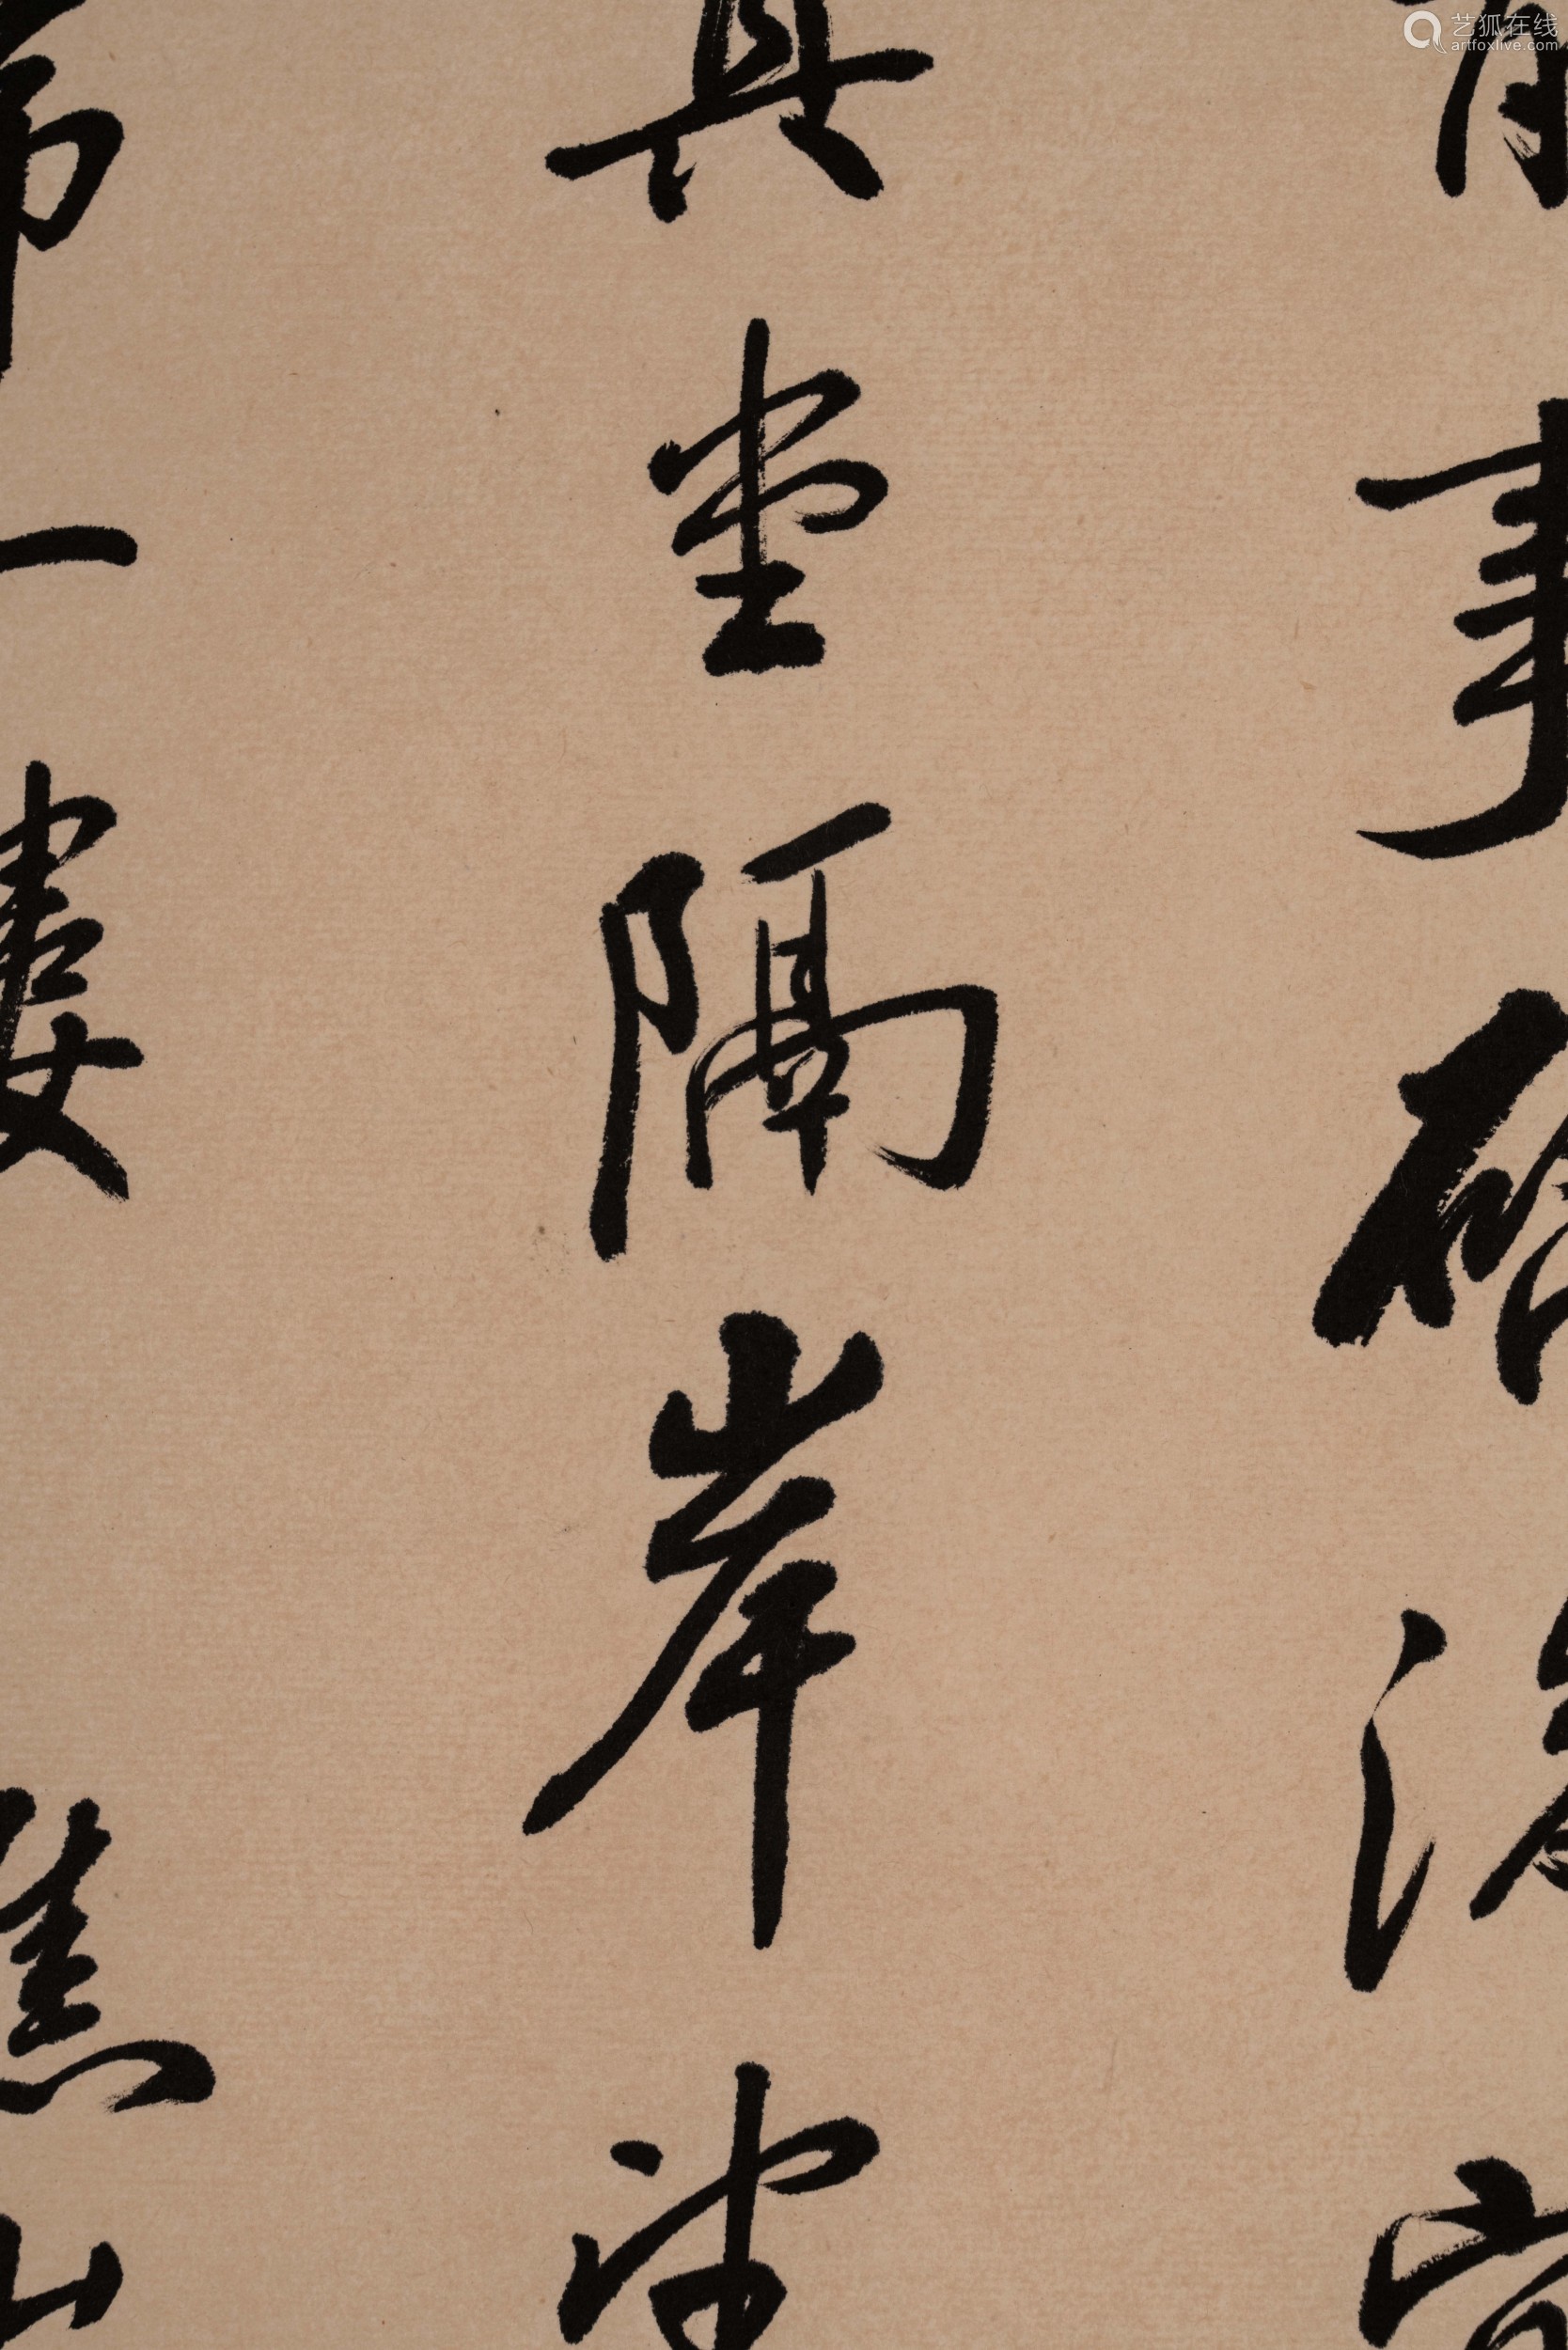 Zhao Puchu's calligraphy vertical scroll